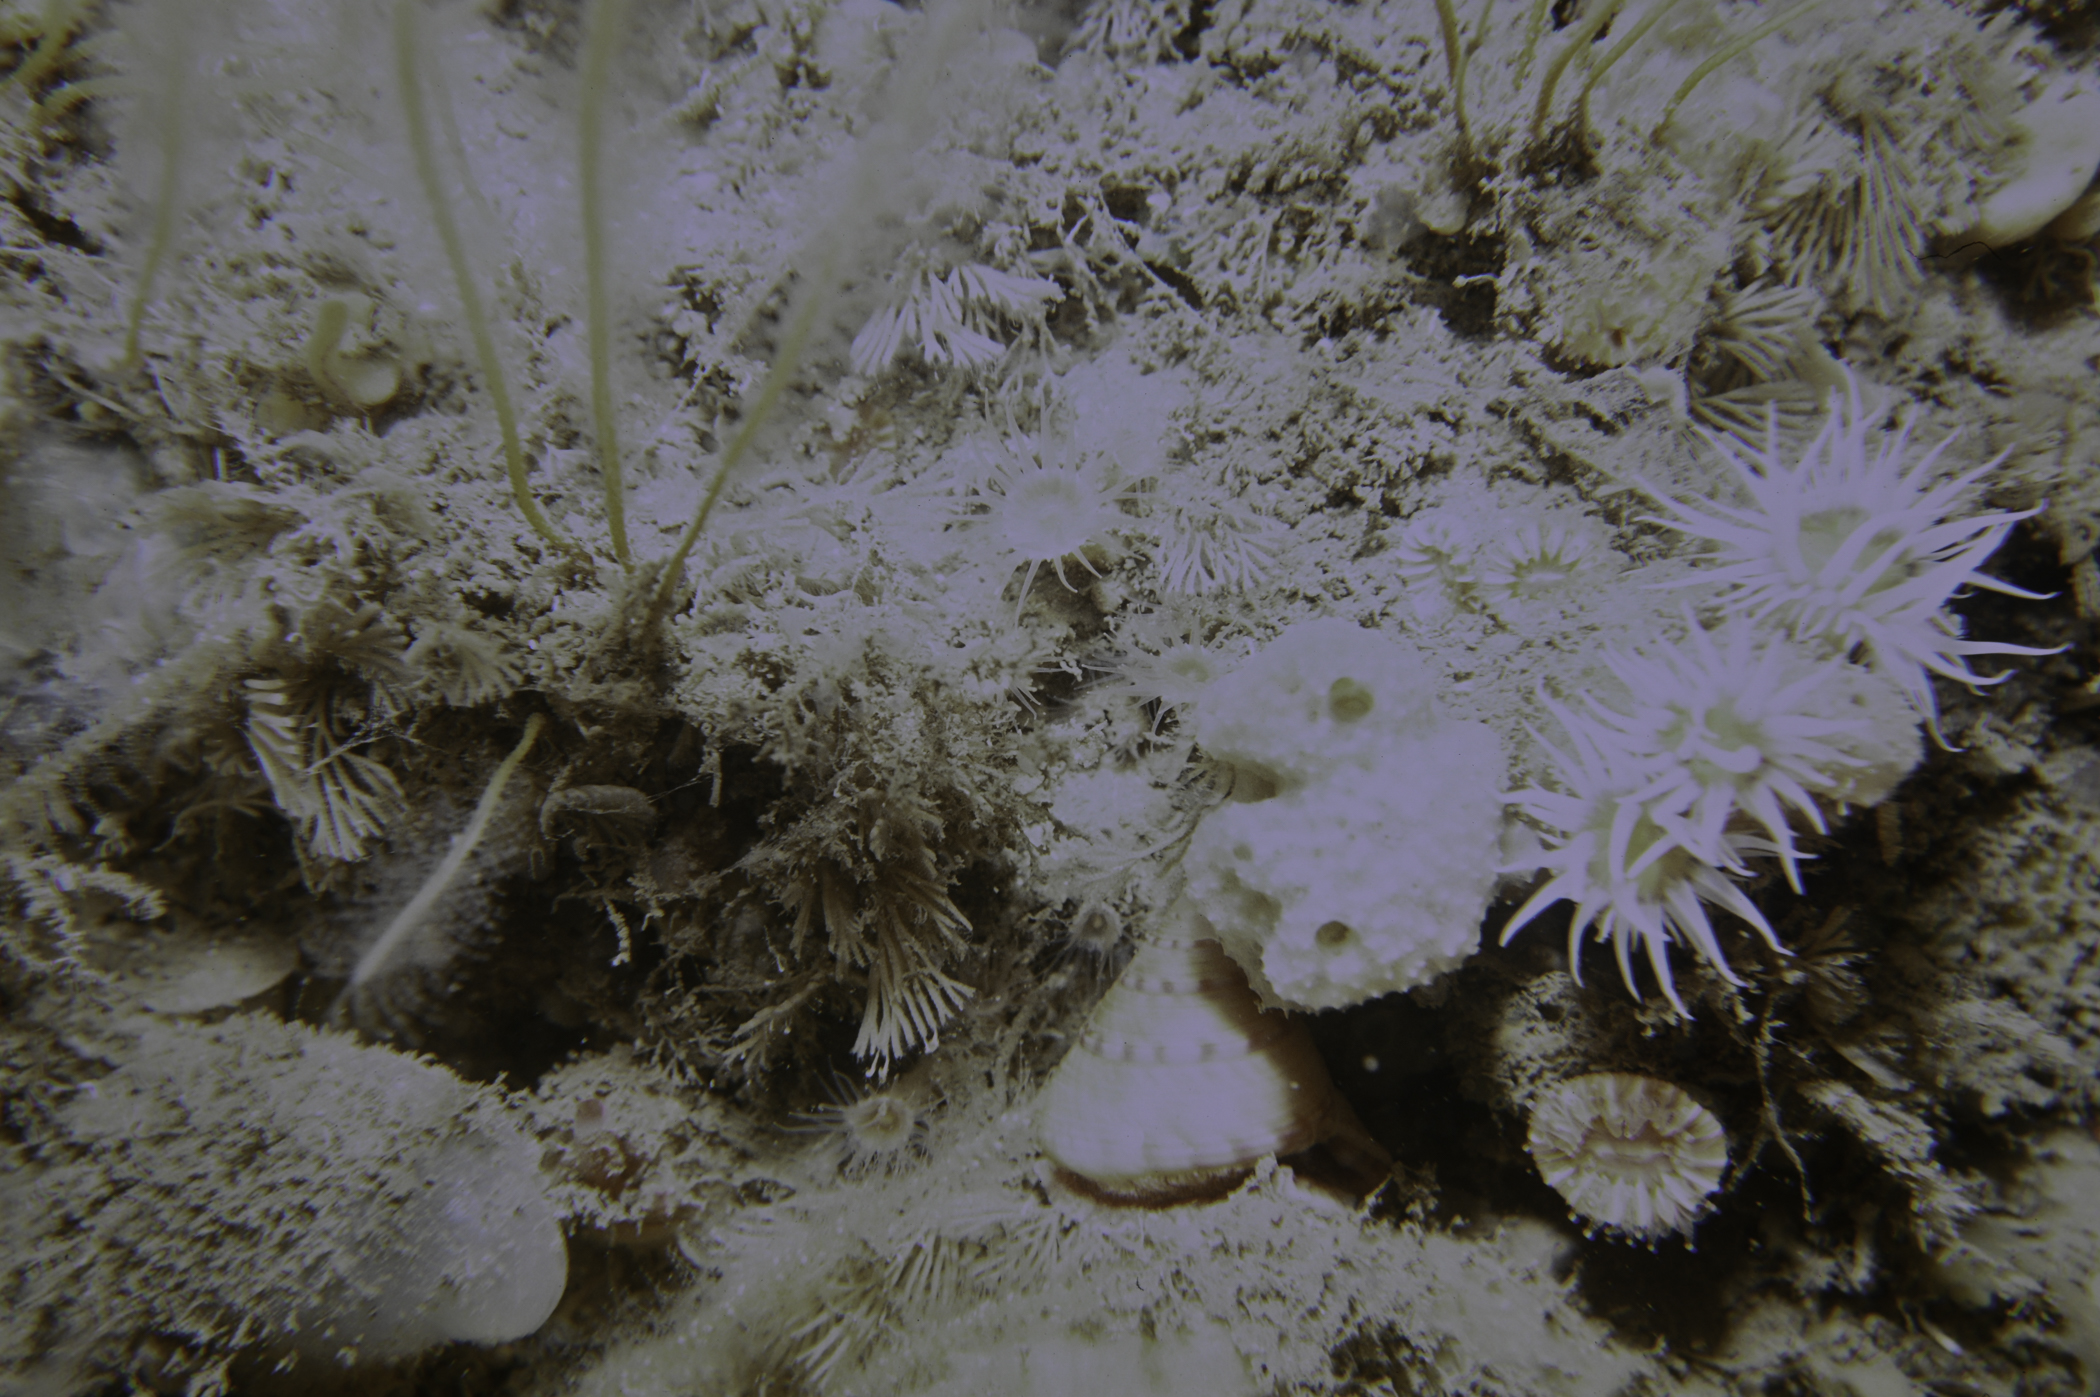 Dysidea fragilis, Epizoanthus couchii, Calliostoma zizyphinum. Site: N of West Lighthouse, Rathlin Island. 